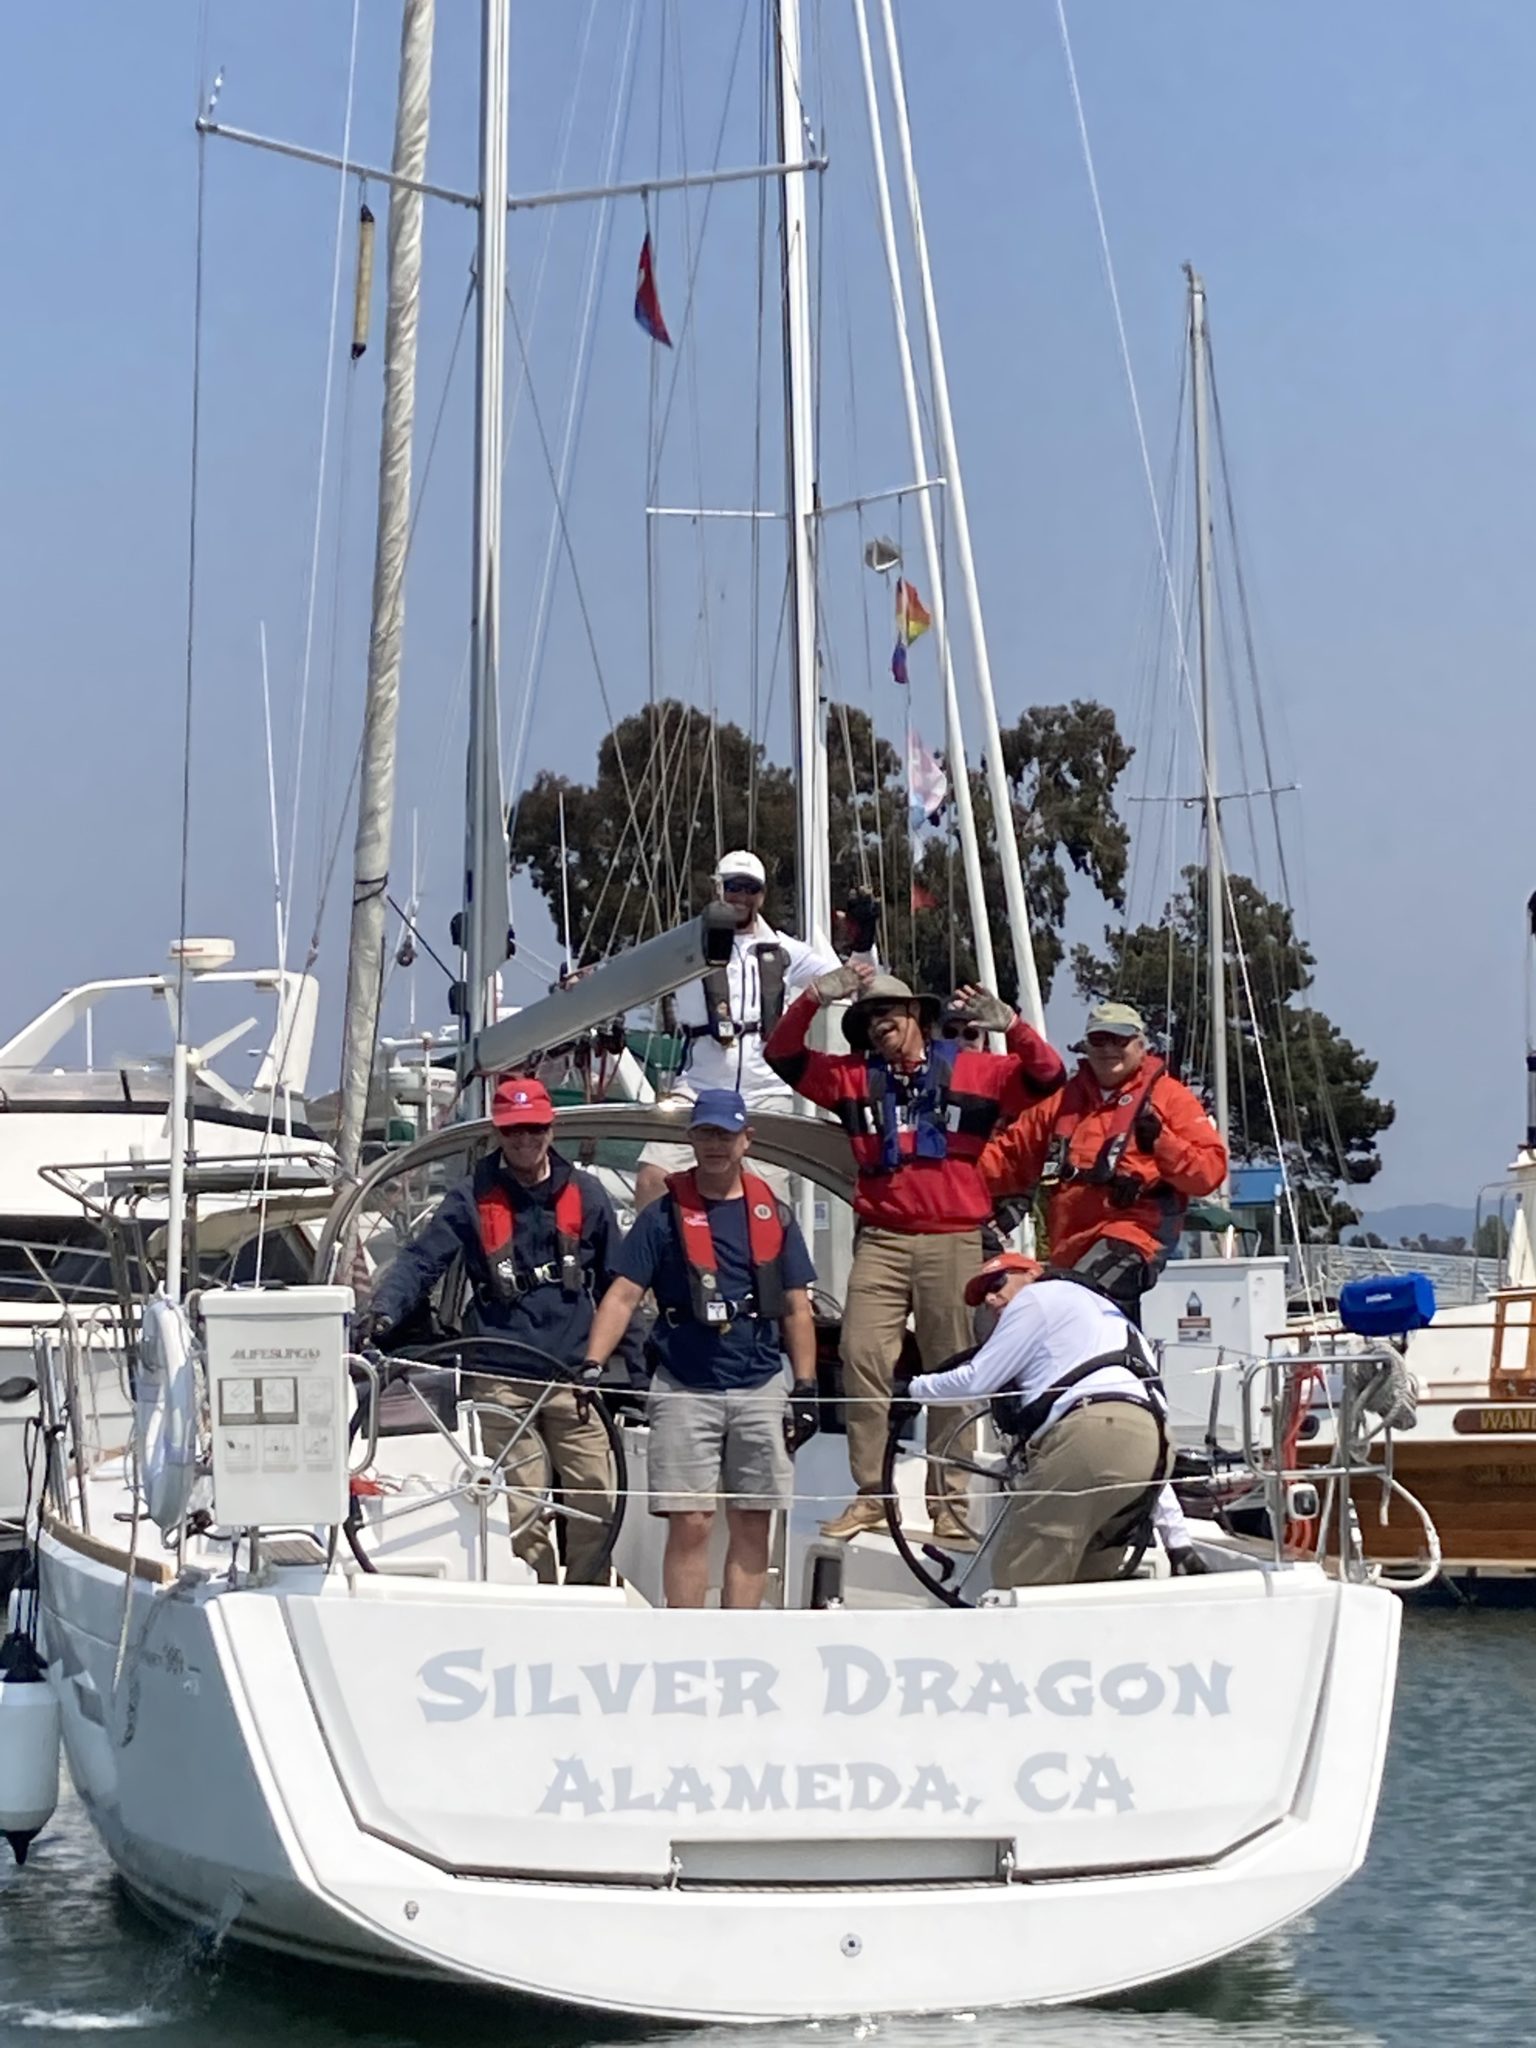 Members son Silver Dragon boat